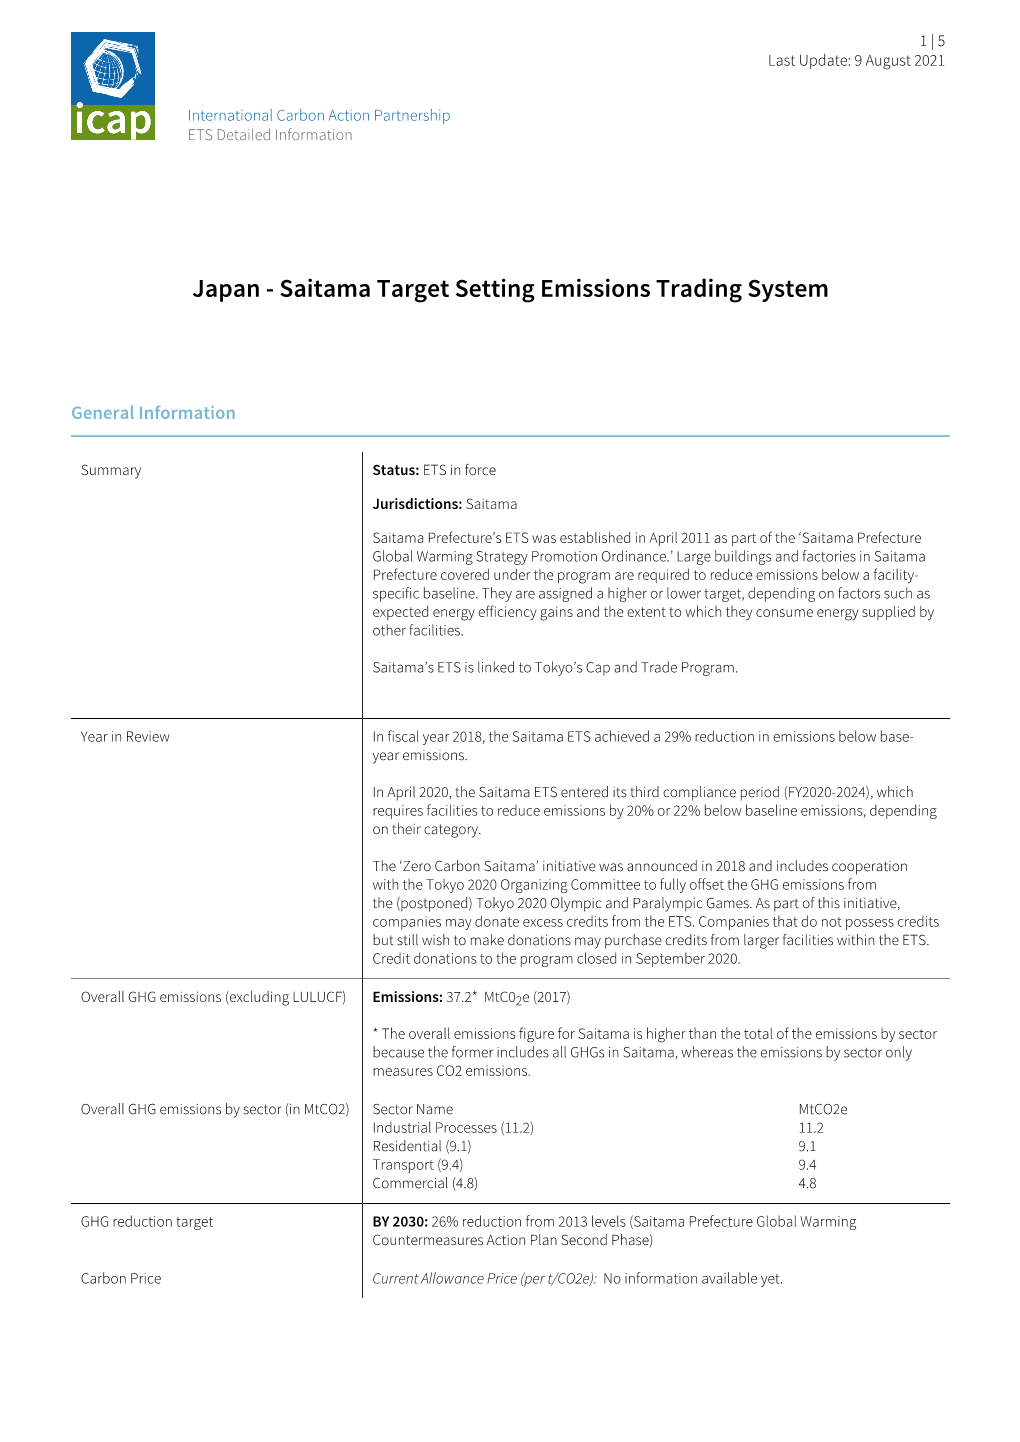 Japan - Saitama Target Setting Emissions Trading System